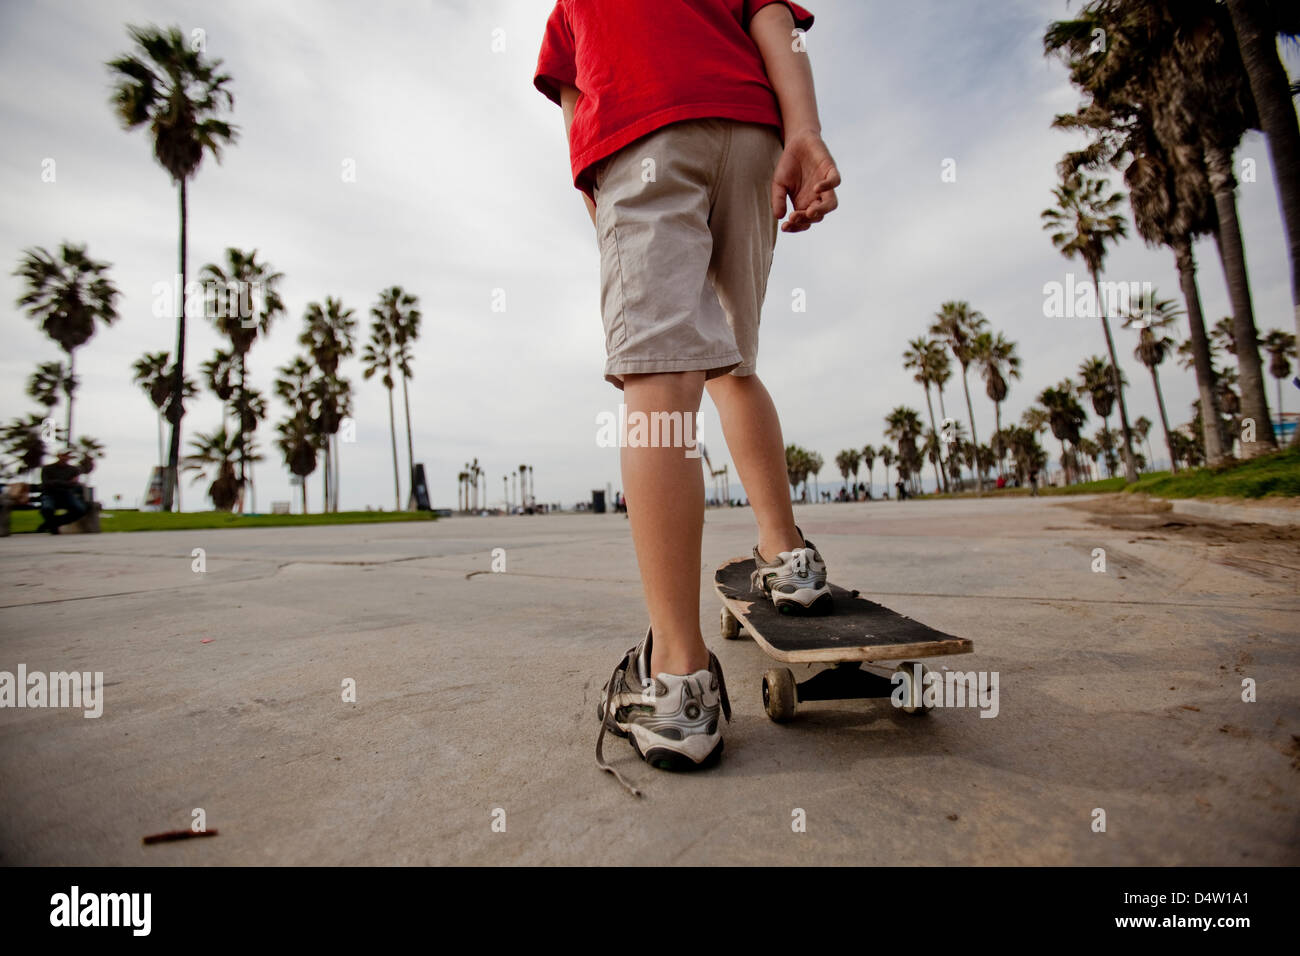 Boy riding on skateboard in park Banque D'Images